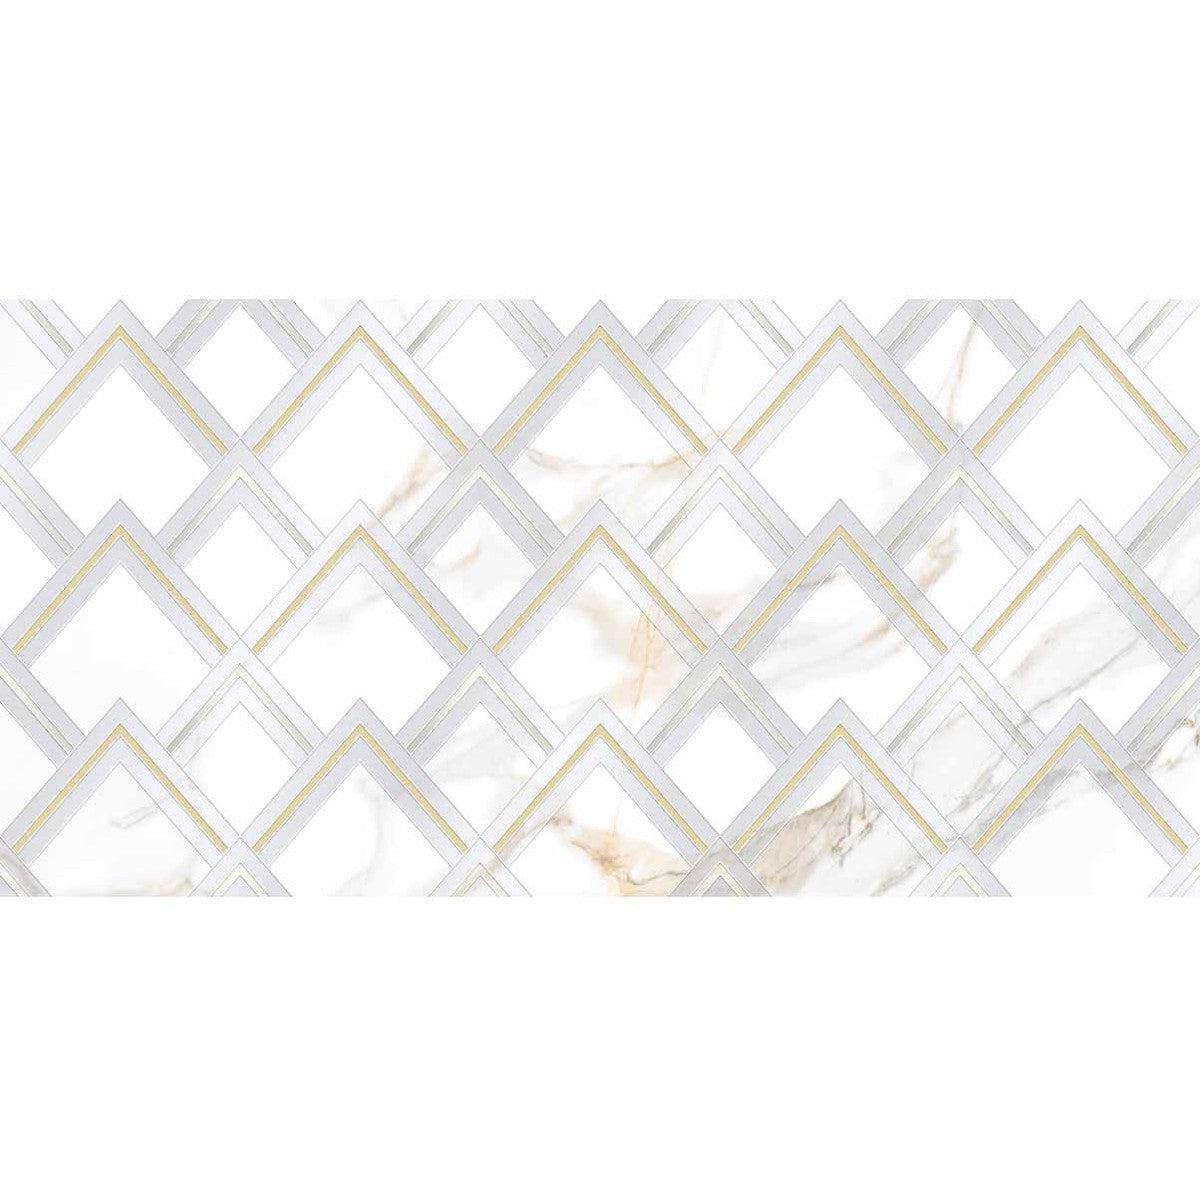 Panorama White Marbled Peak Porcelain Tile 24x48 Sample